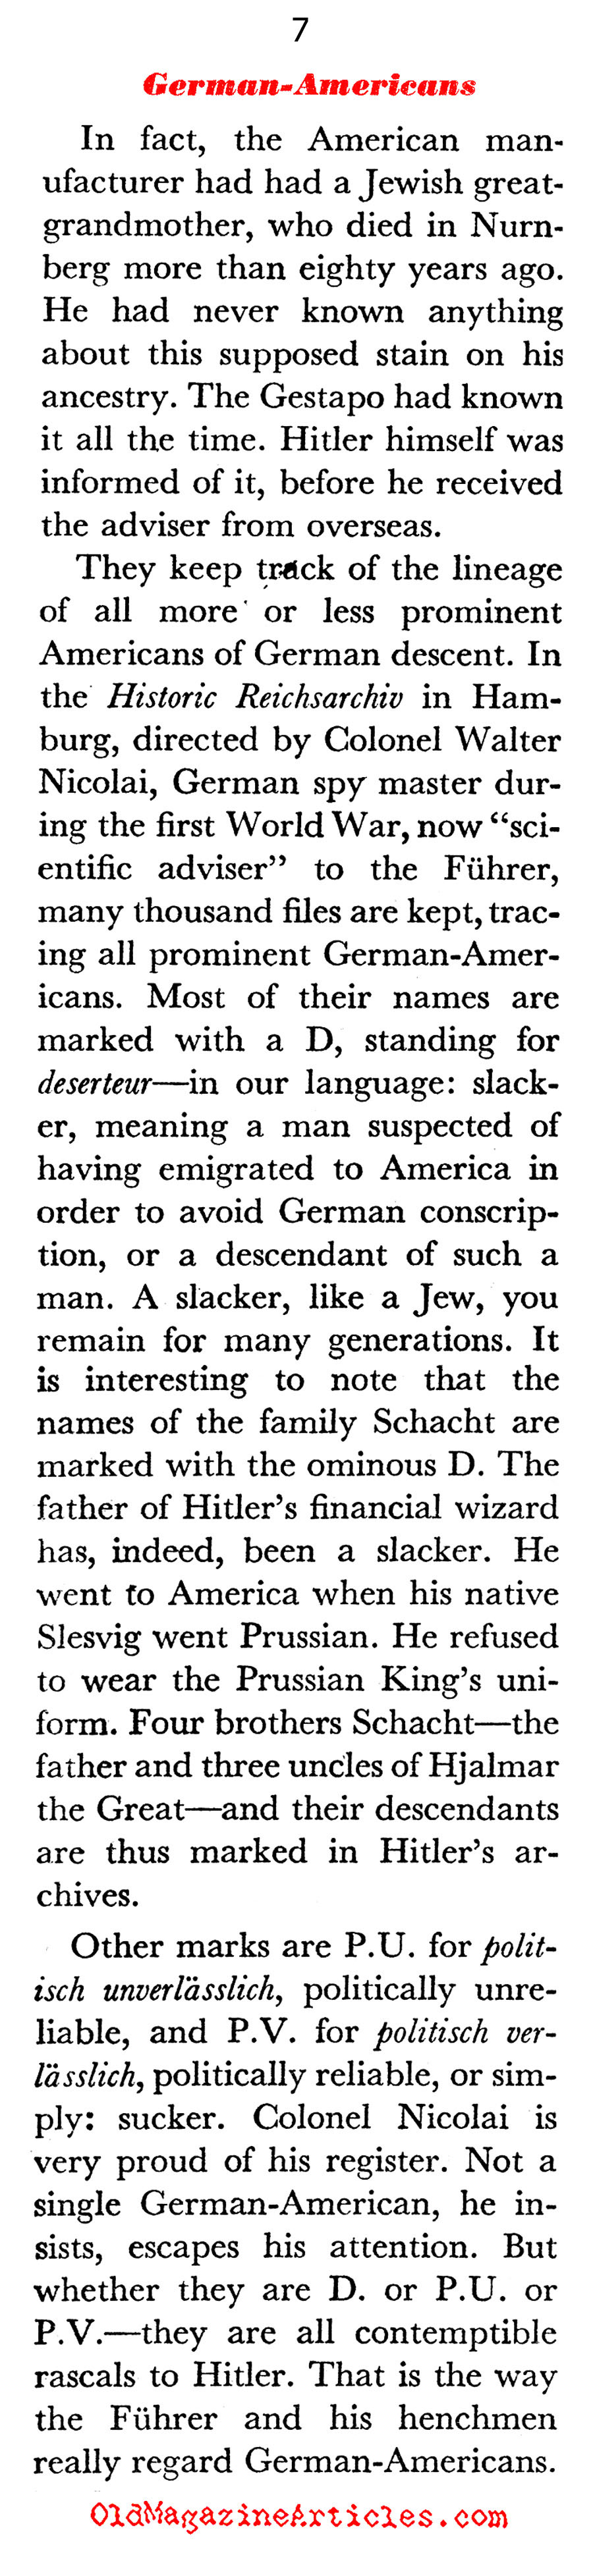 Adolf Hitler and the German-Americans (Coronet Magazine, 1941)